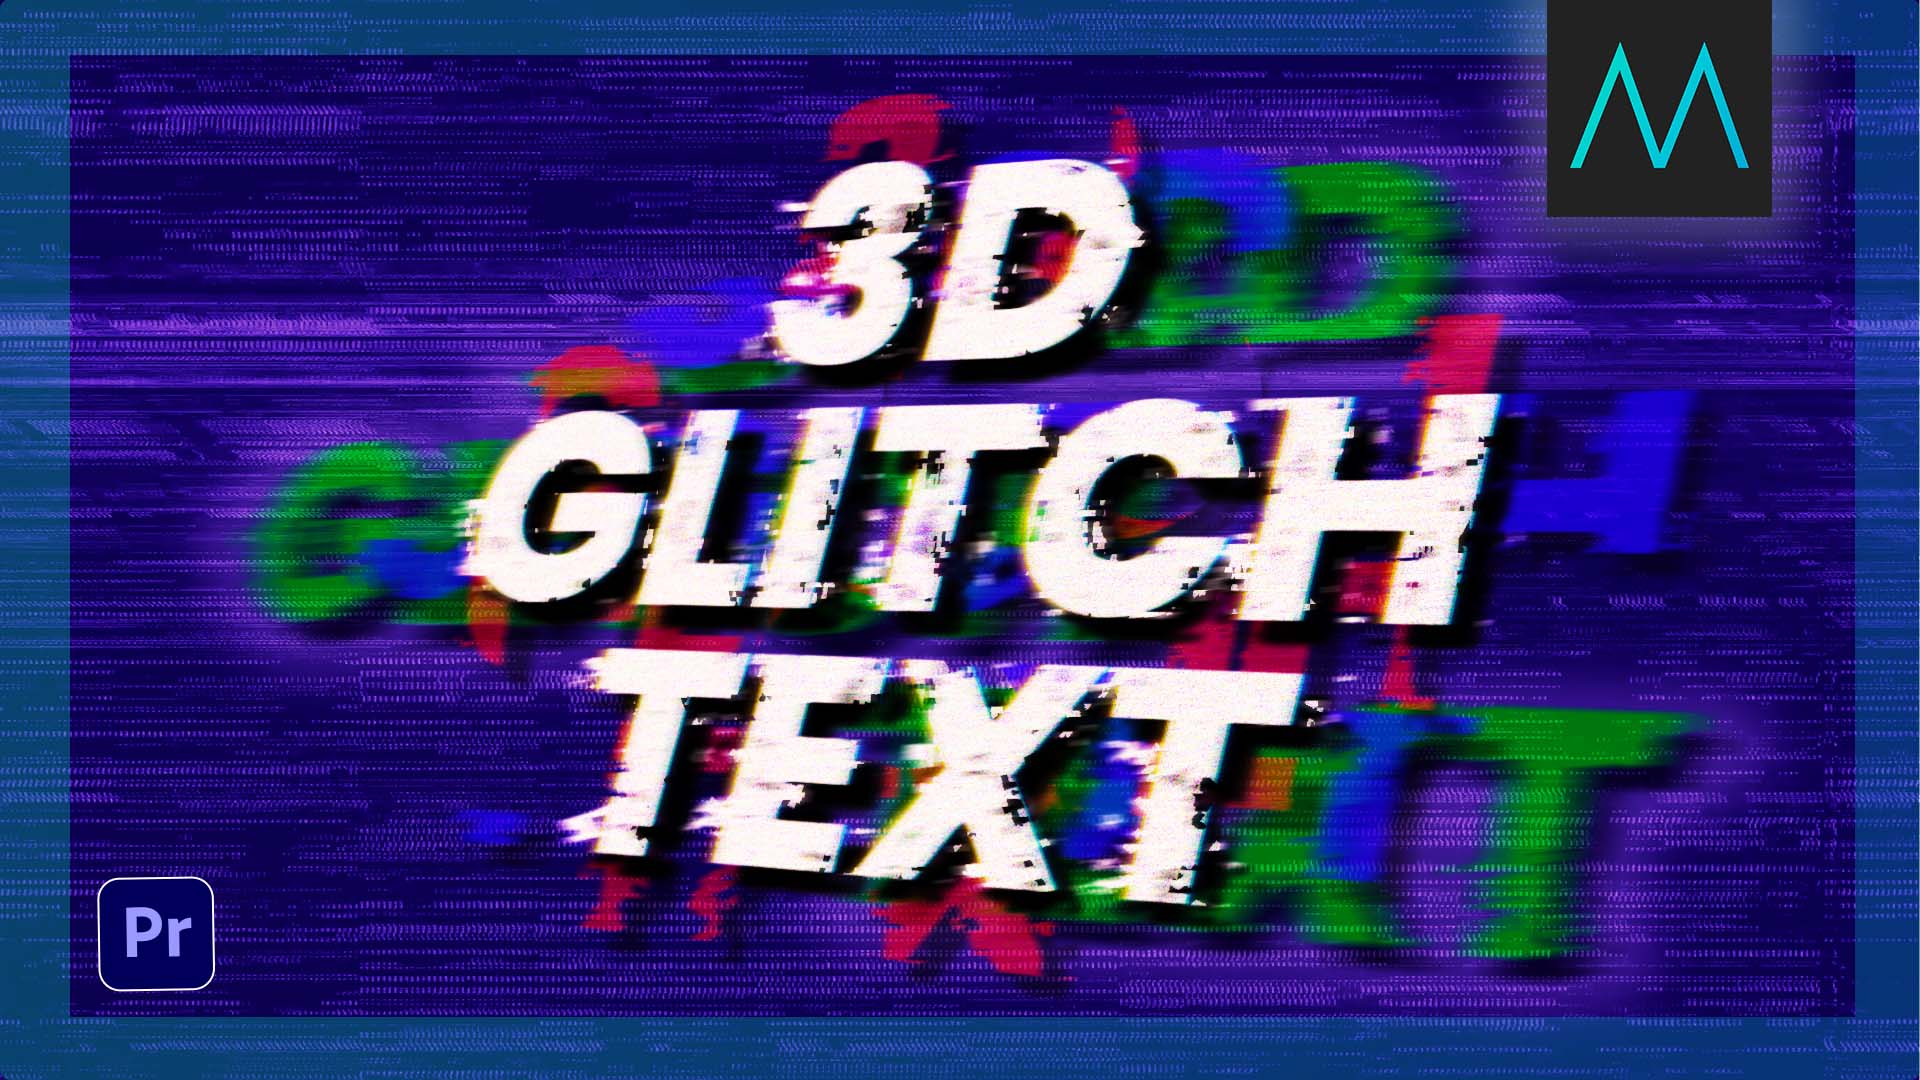 How To Create Glitch Animations In Premiere Pro - MASV